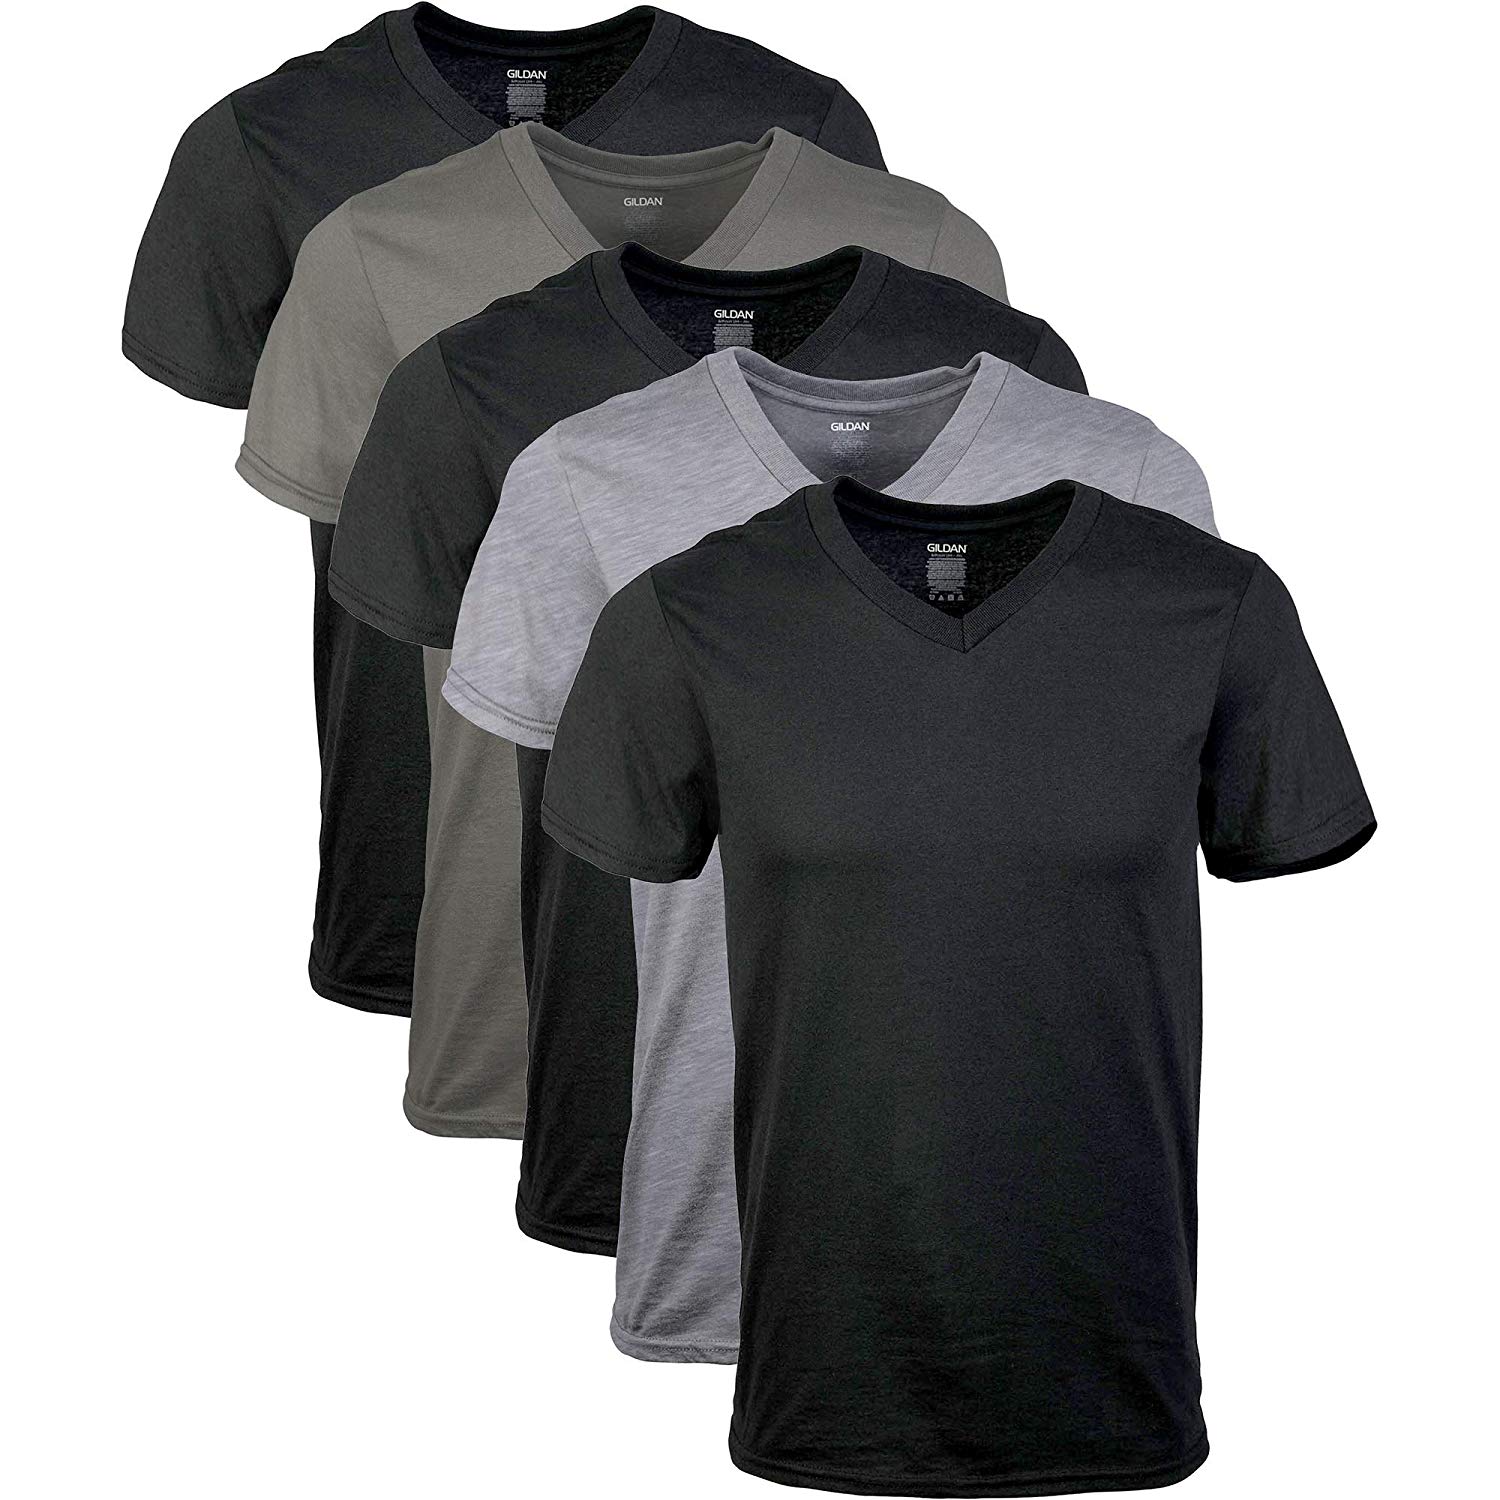 Gildan Men's V-Neck T-Shirts 5 Pack, Multi, Medium, MultiColor, Size ...